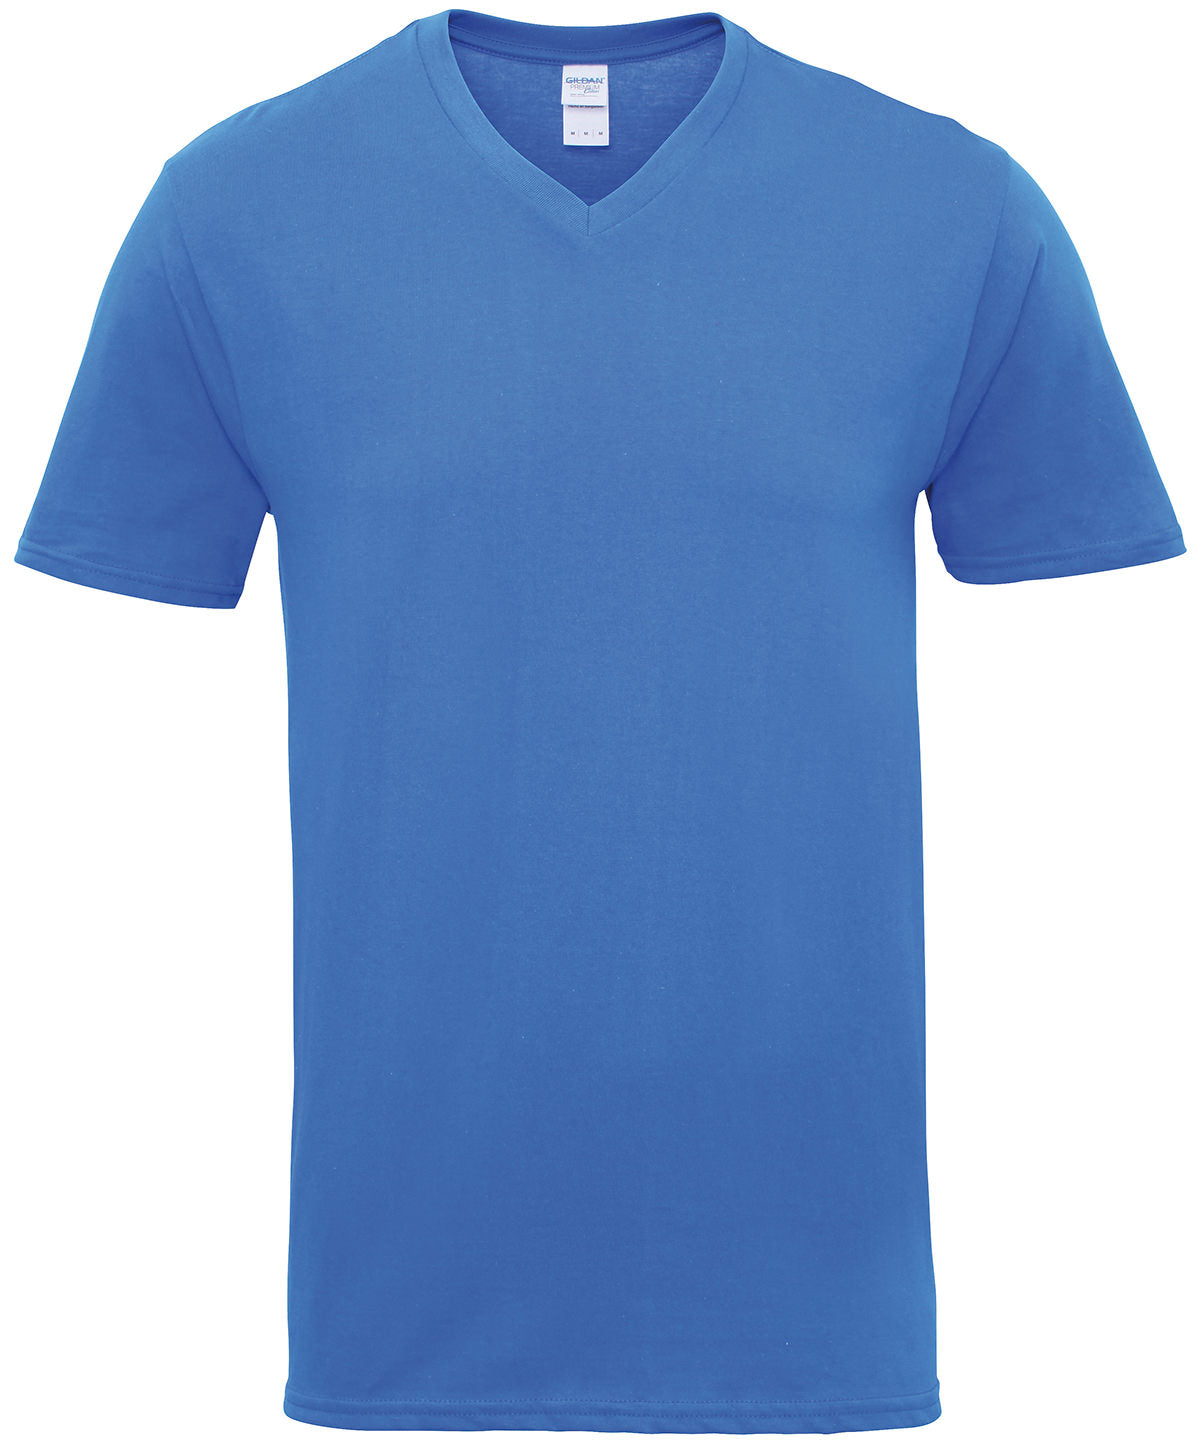 GD016 Gildan Royal Premium Cotton® adult v-neck t-shirt